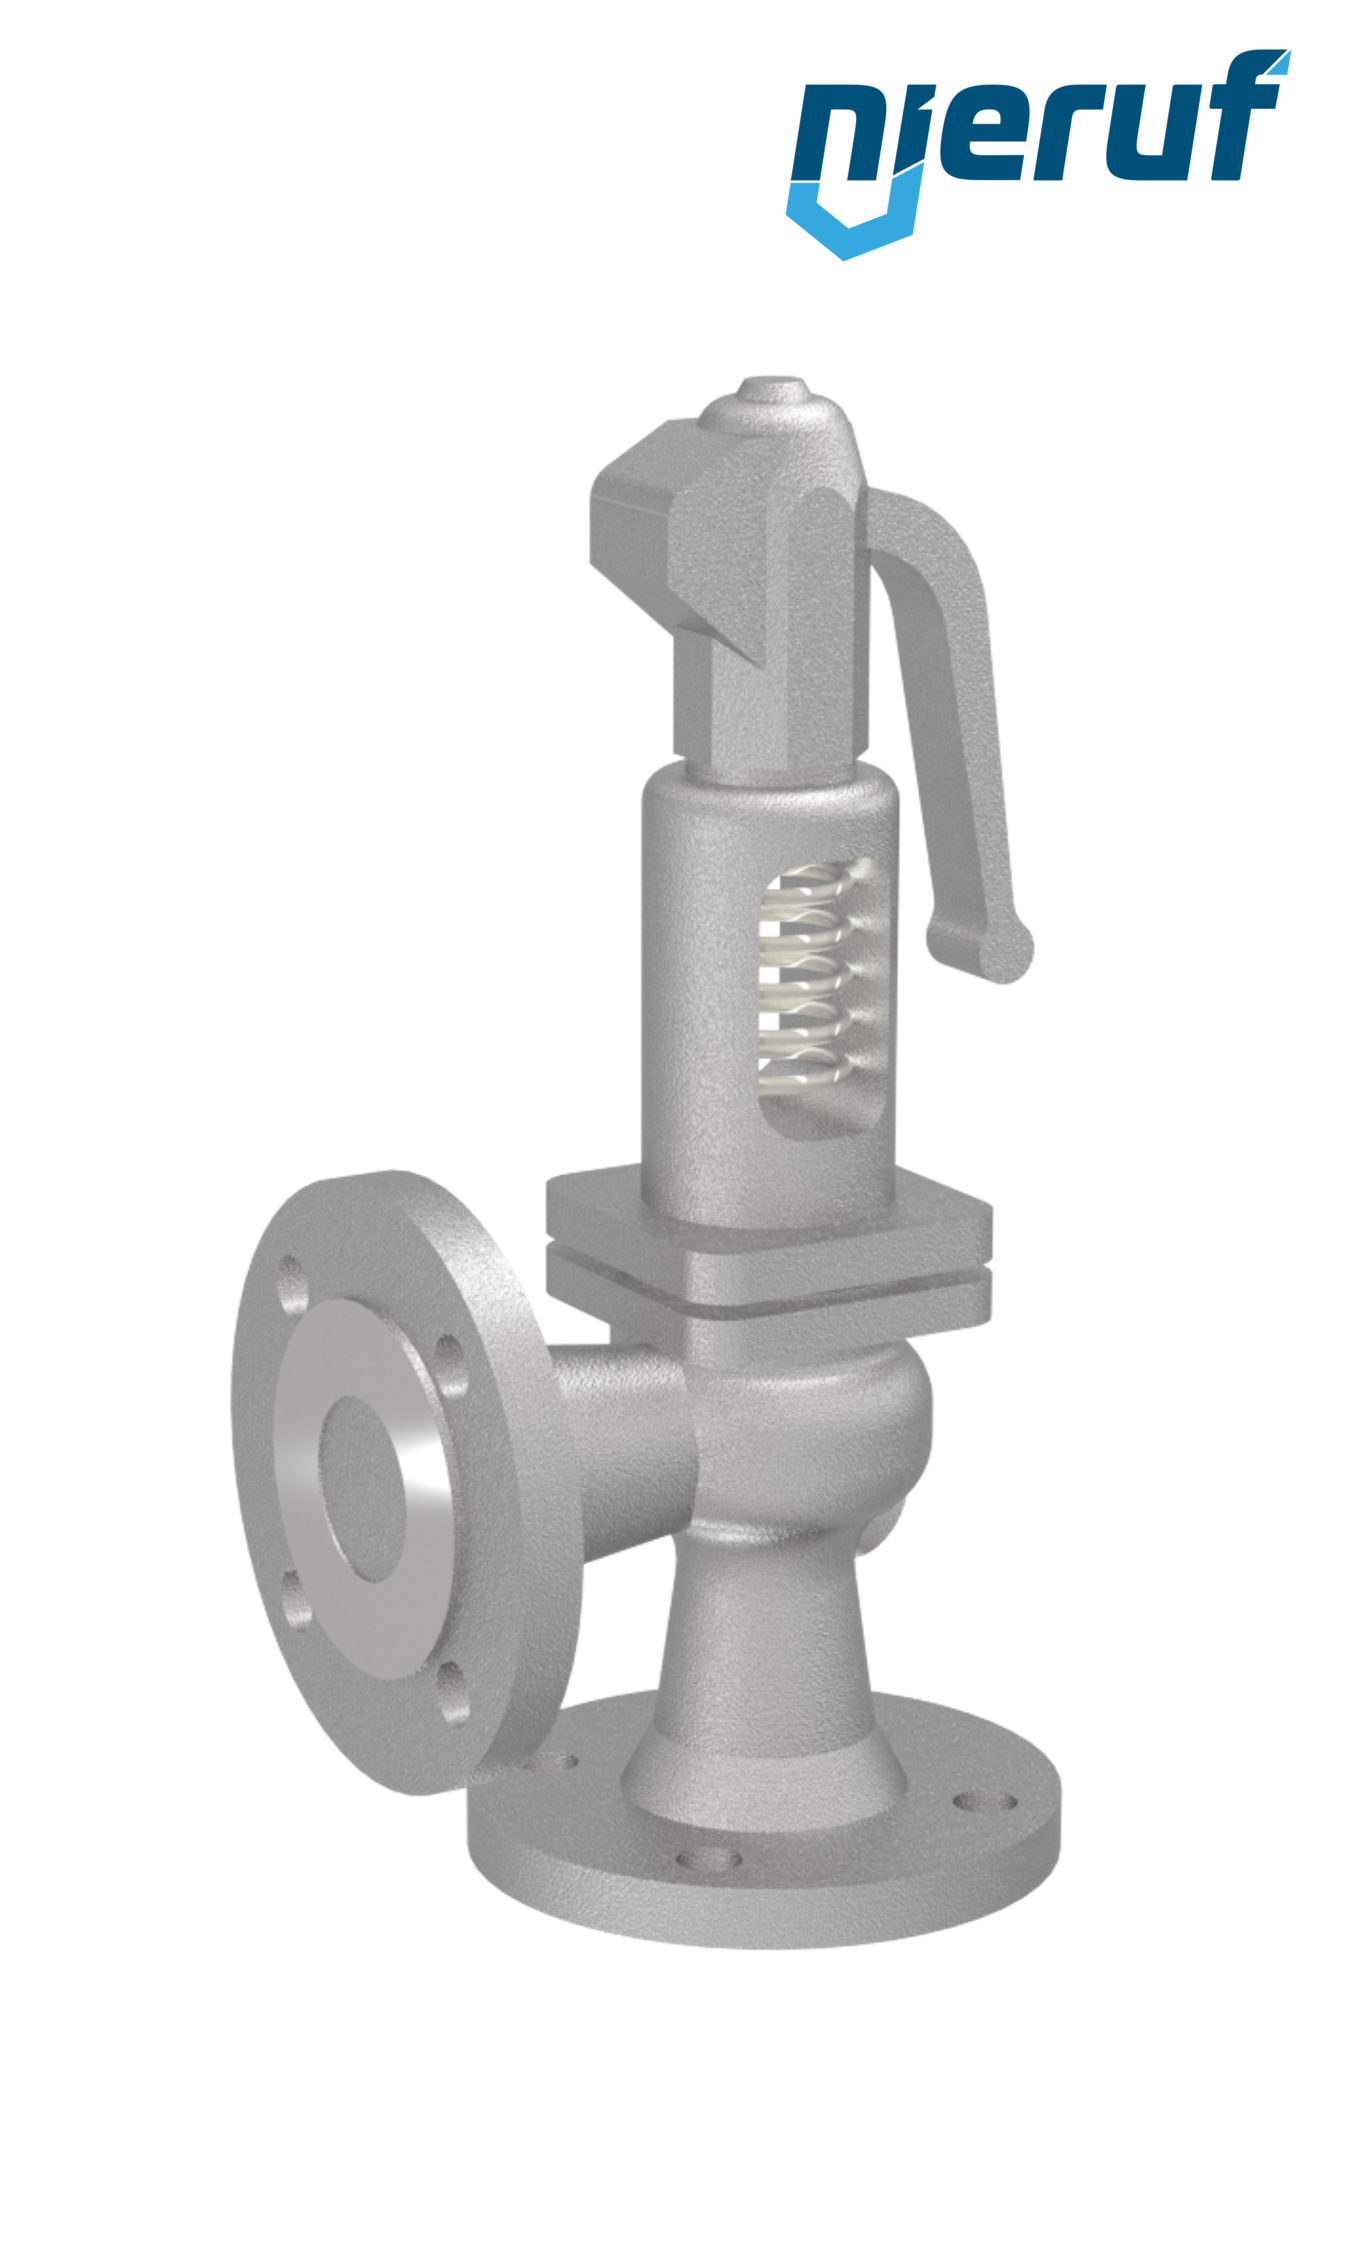 flange-safety valve DN50/DN50 SF0102, cast iron EN-JL1040 EPDM, with lever